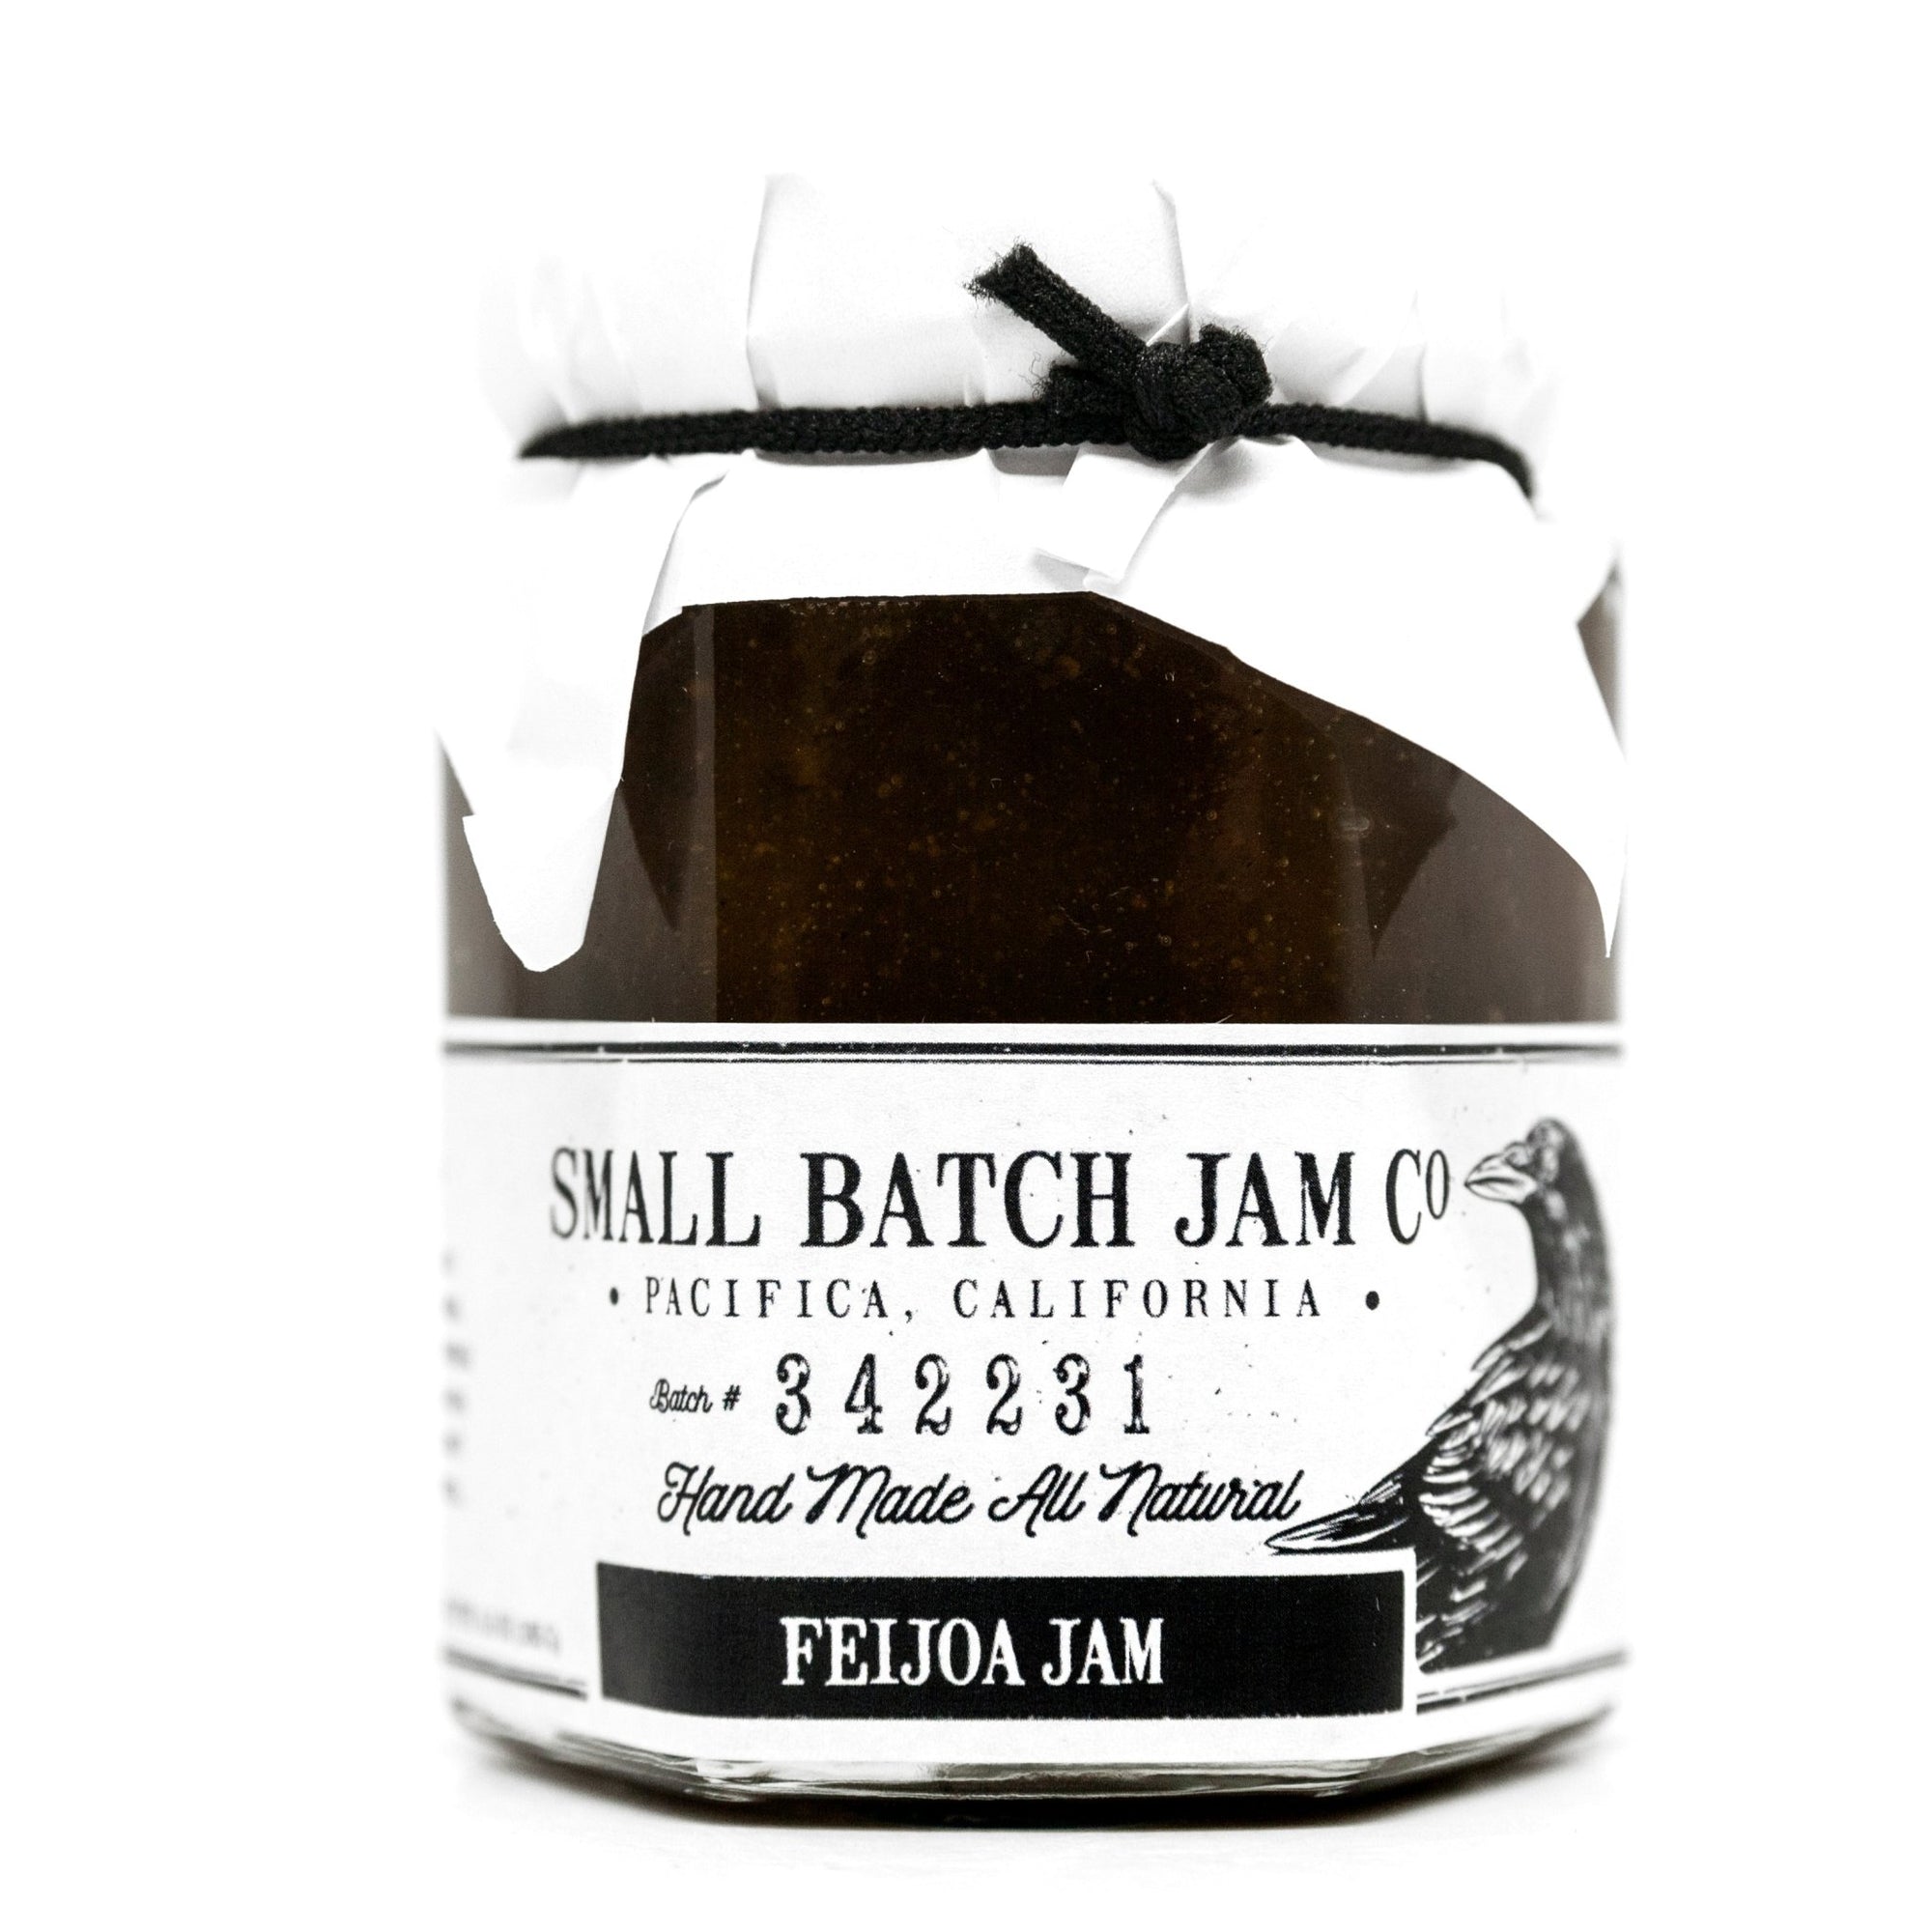 Feijoa Jam - Small Batch Jam Co